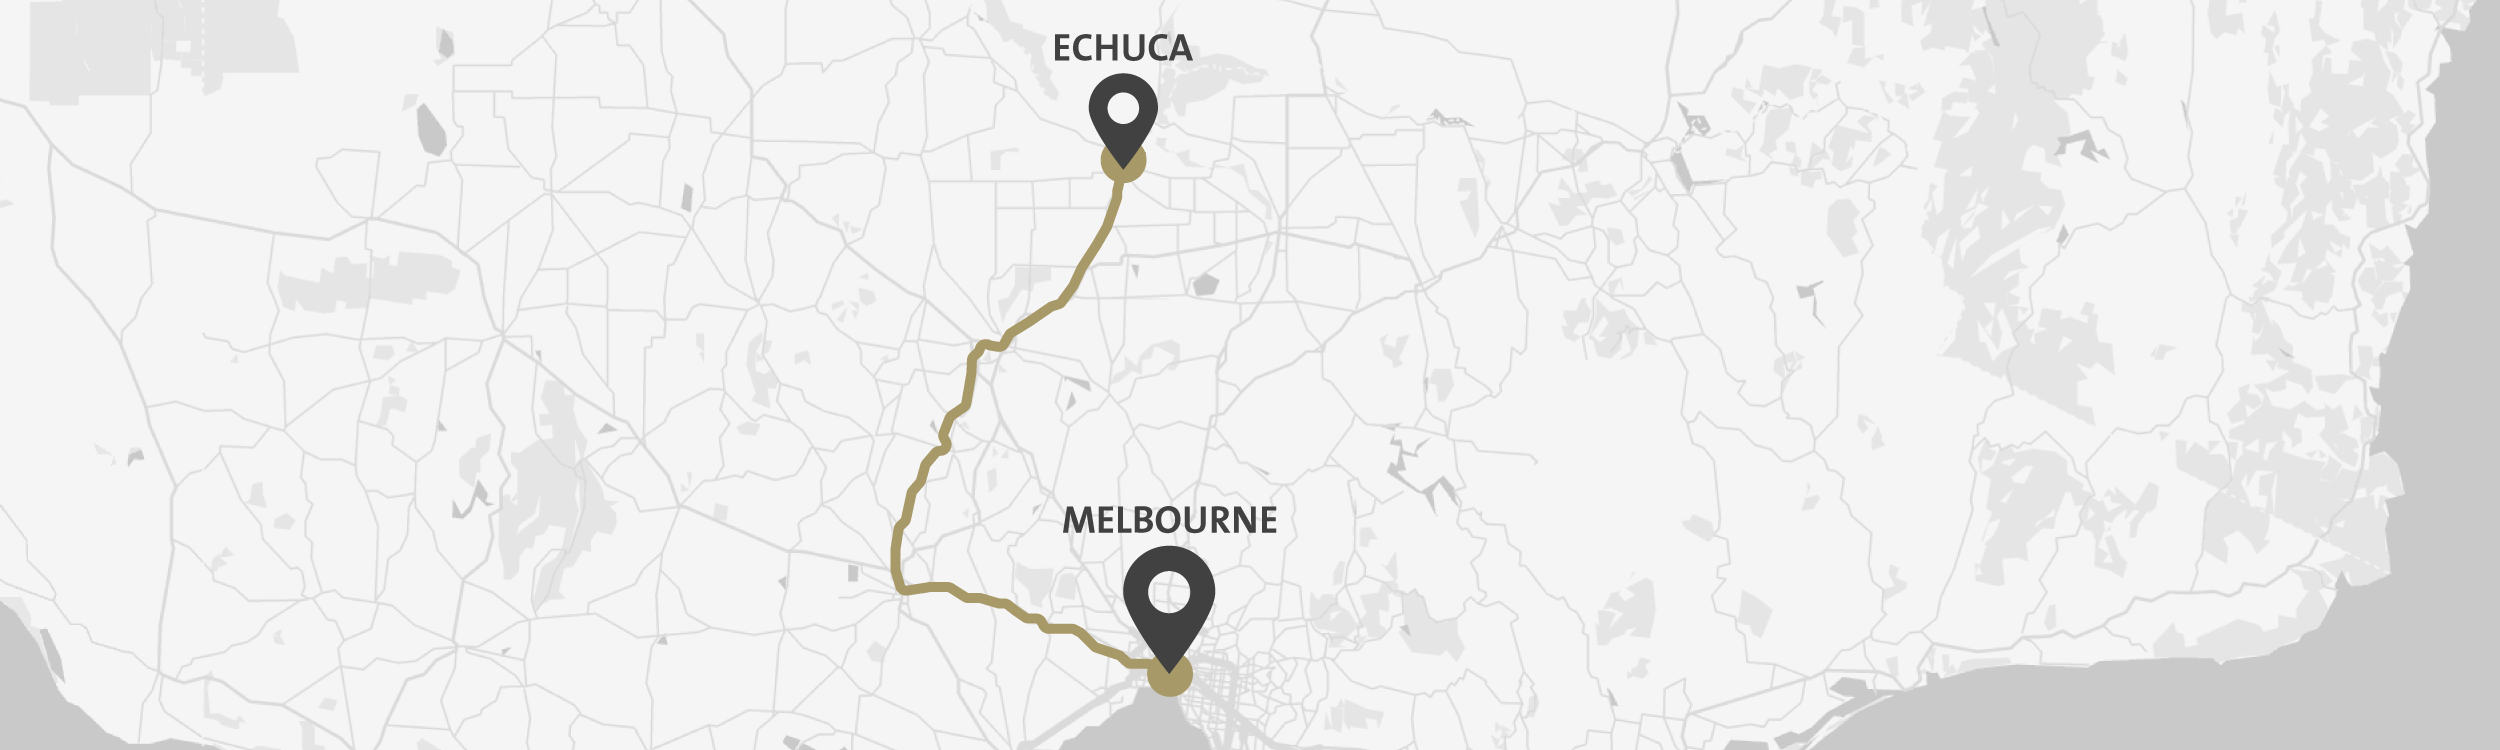 Melbourne to Echuca Road Trip